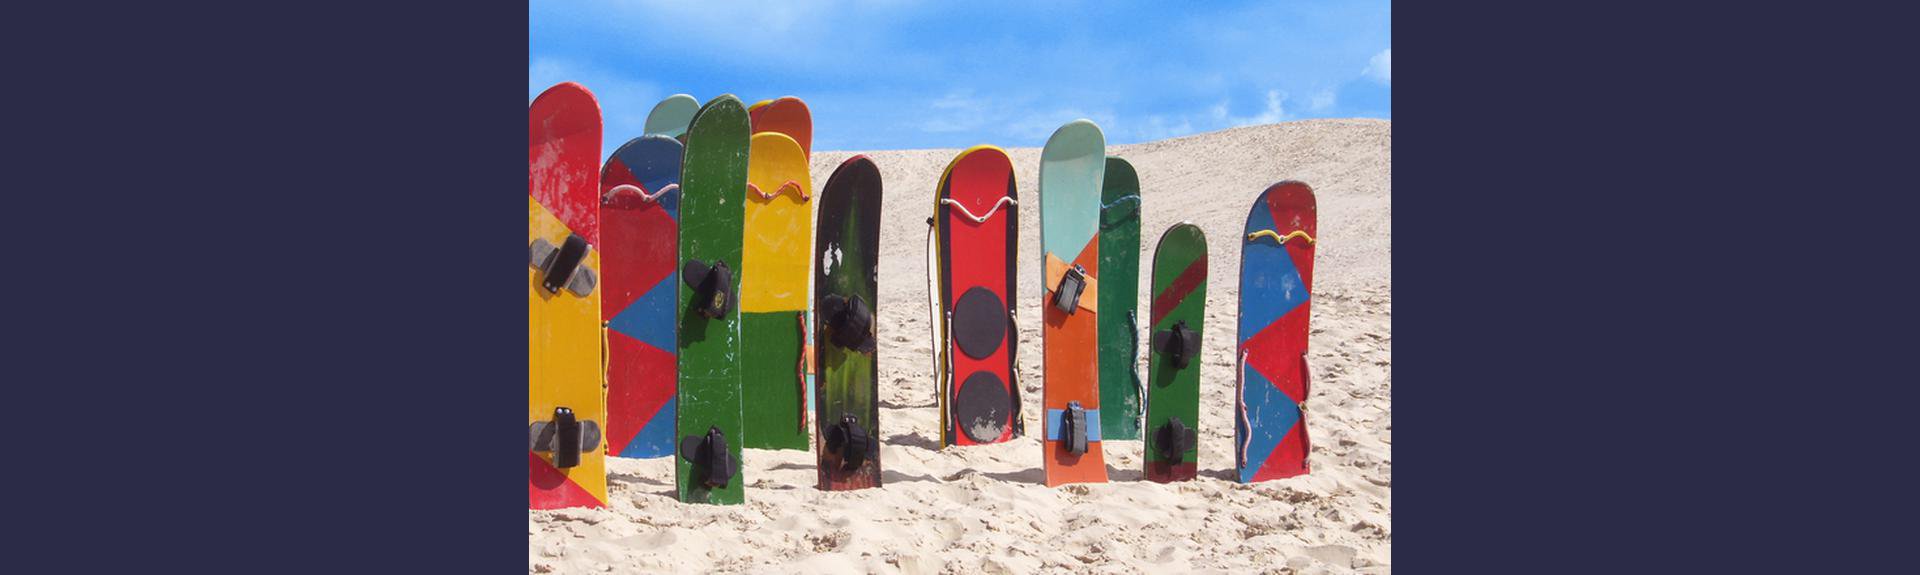 Longest Sandboarding dune south africa